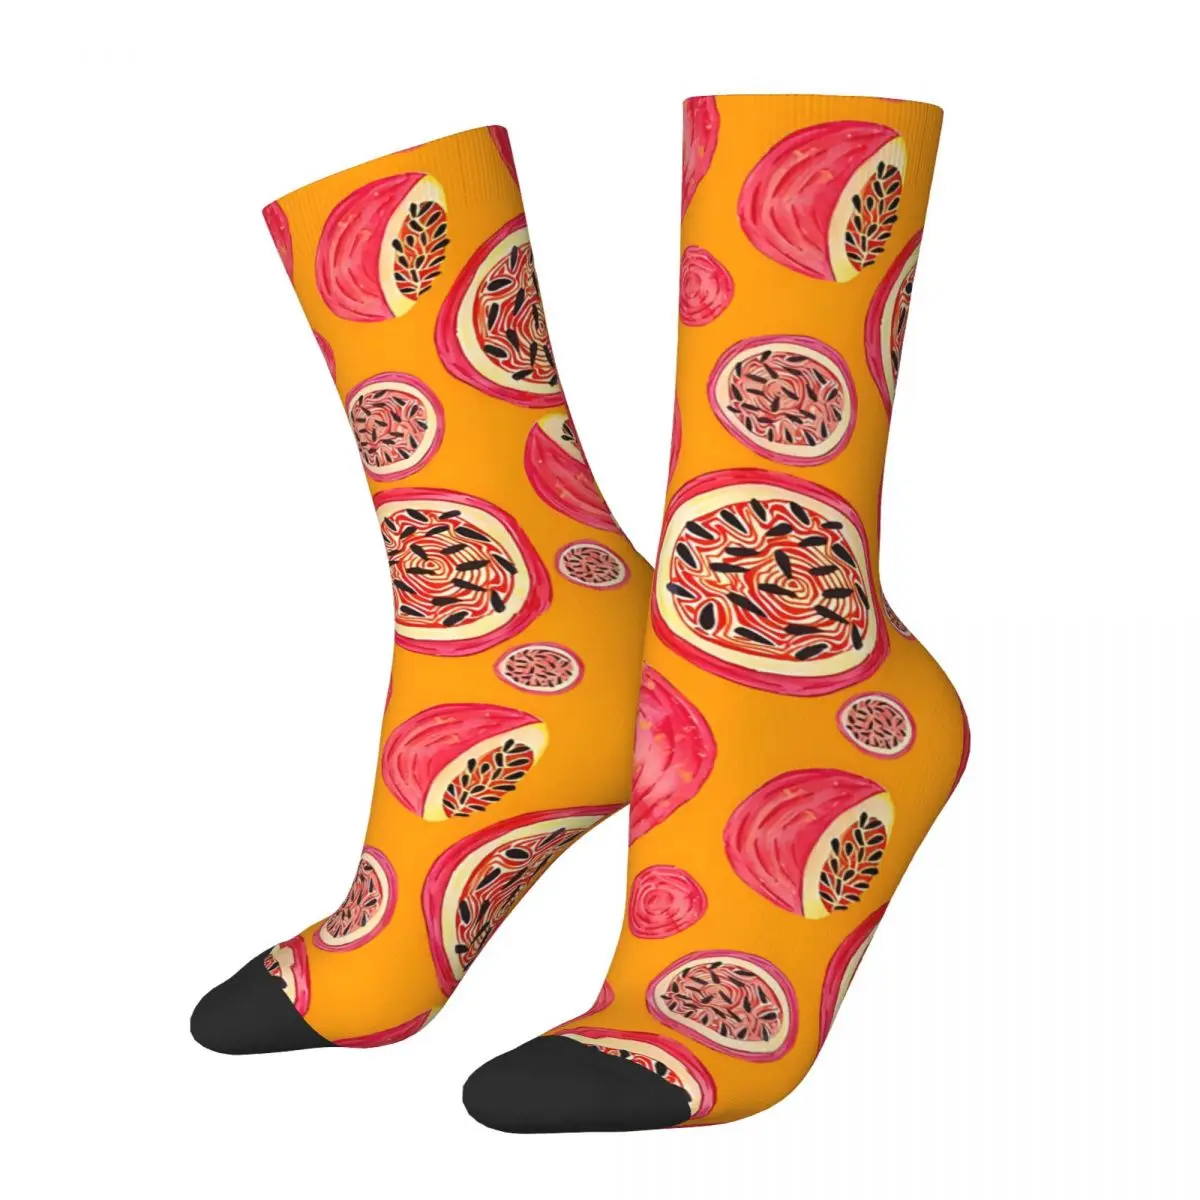 

Passion Fruit Funny Men's Socks Retro Fruits Food Hip Hop Crazy Crew Sock Gift Pattern Printed